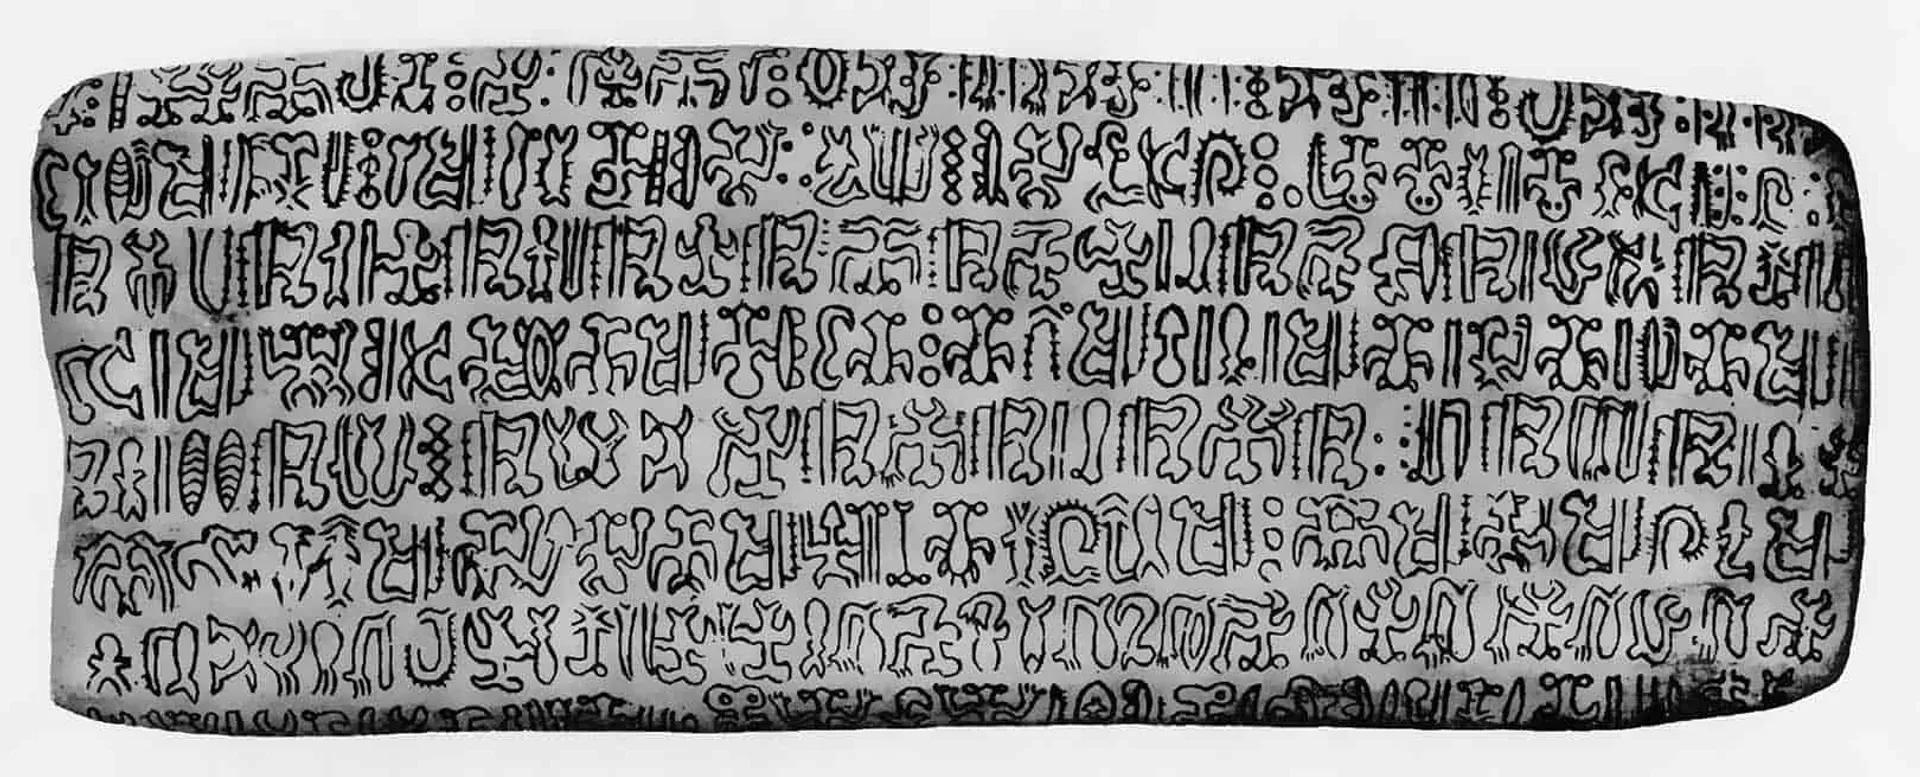 A picture of a Tohau rongorongo writing board (source: //boloji.com)